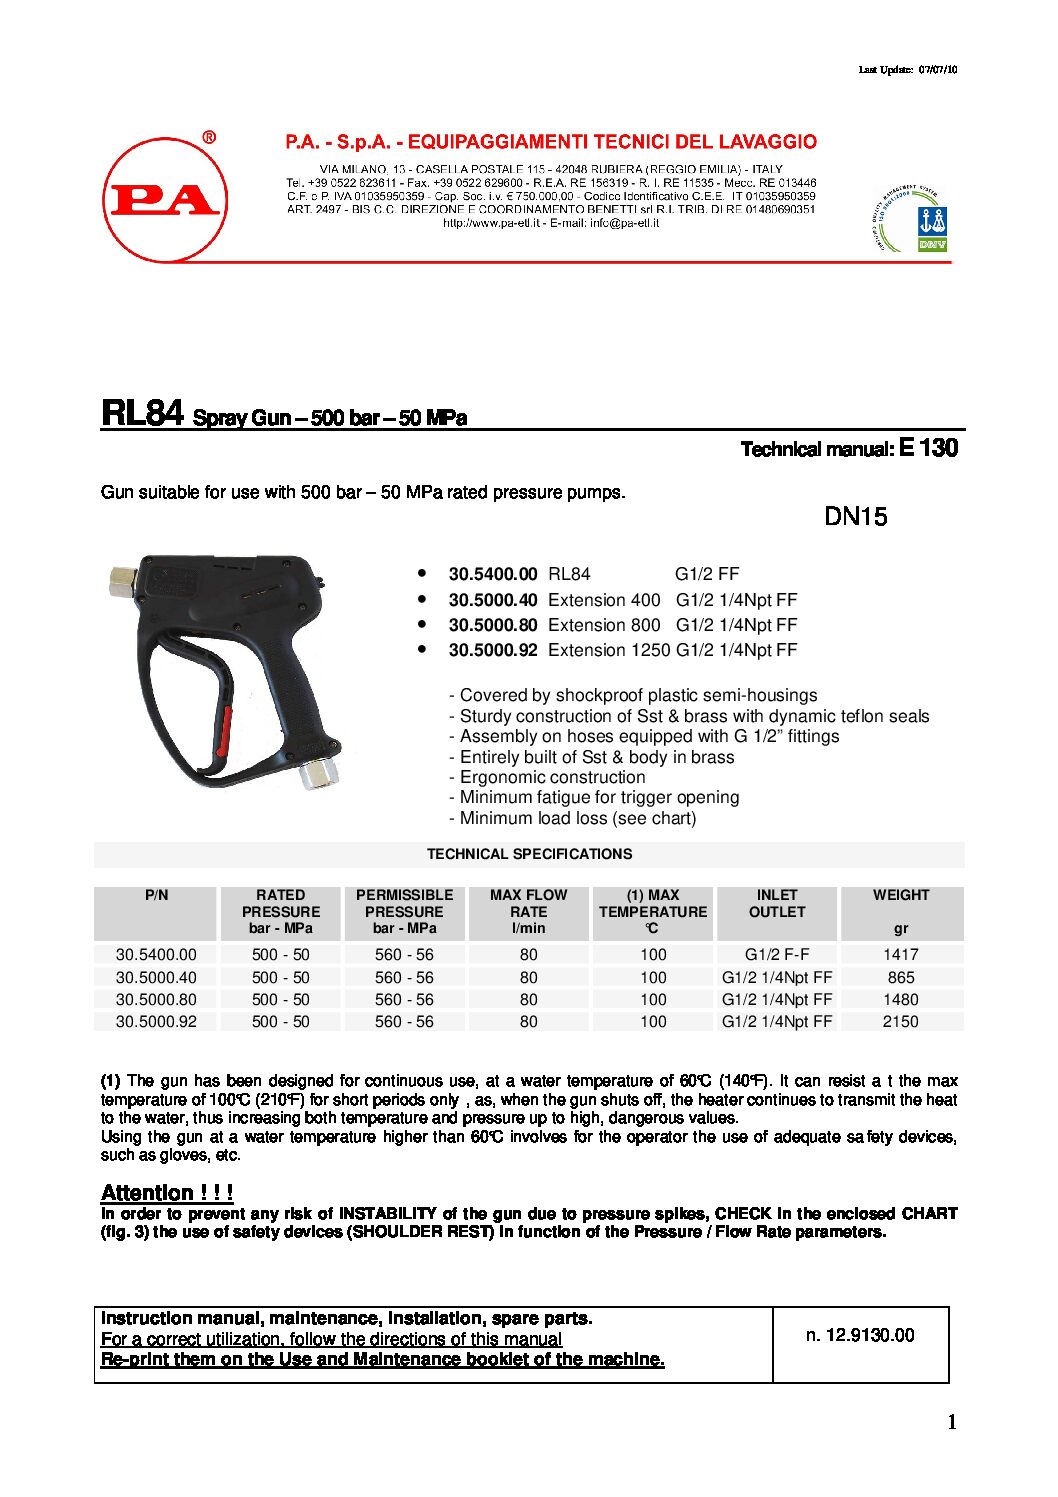 PA RL84 Spray gun technical information